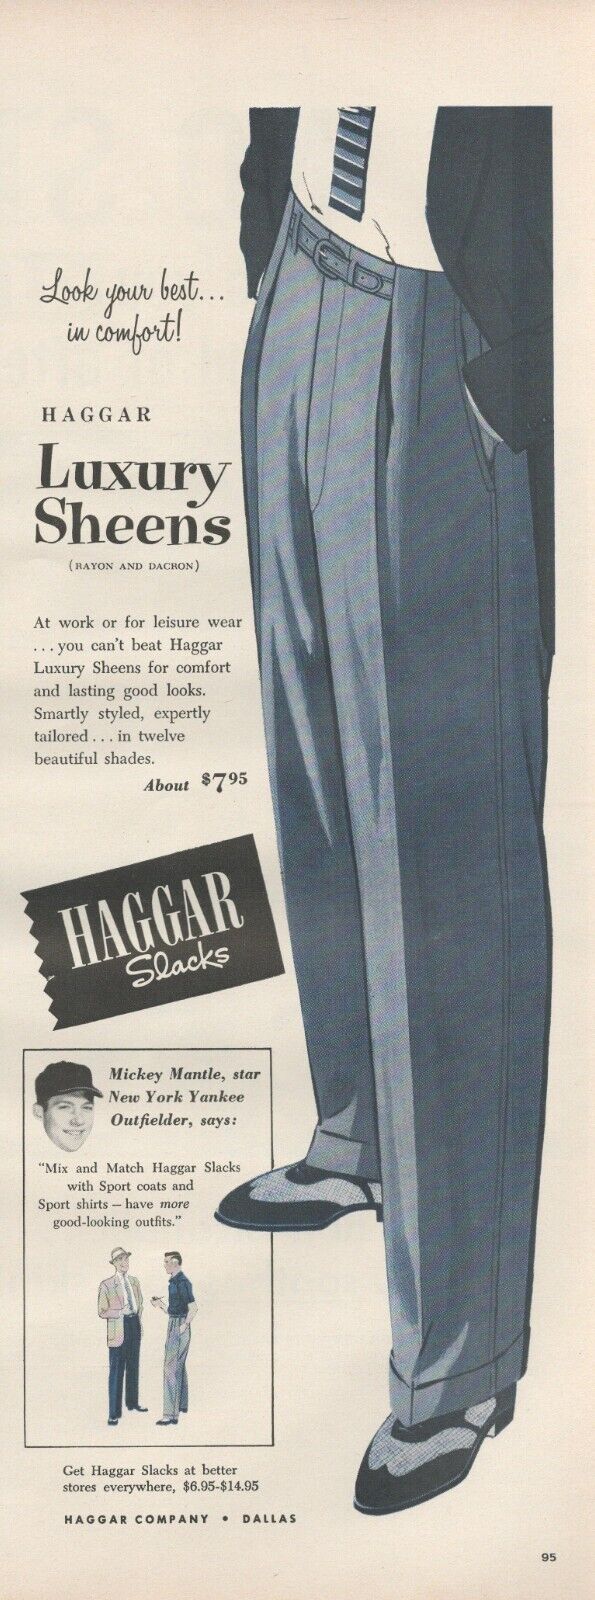 1955 Haggar Slacks Luxury Sheens Look Your Best in Comfort Vintage Print Ad